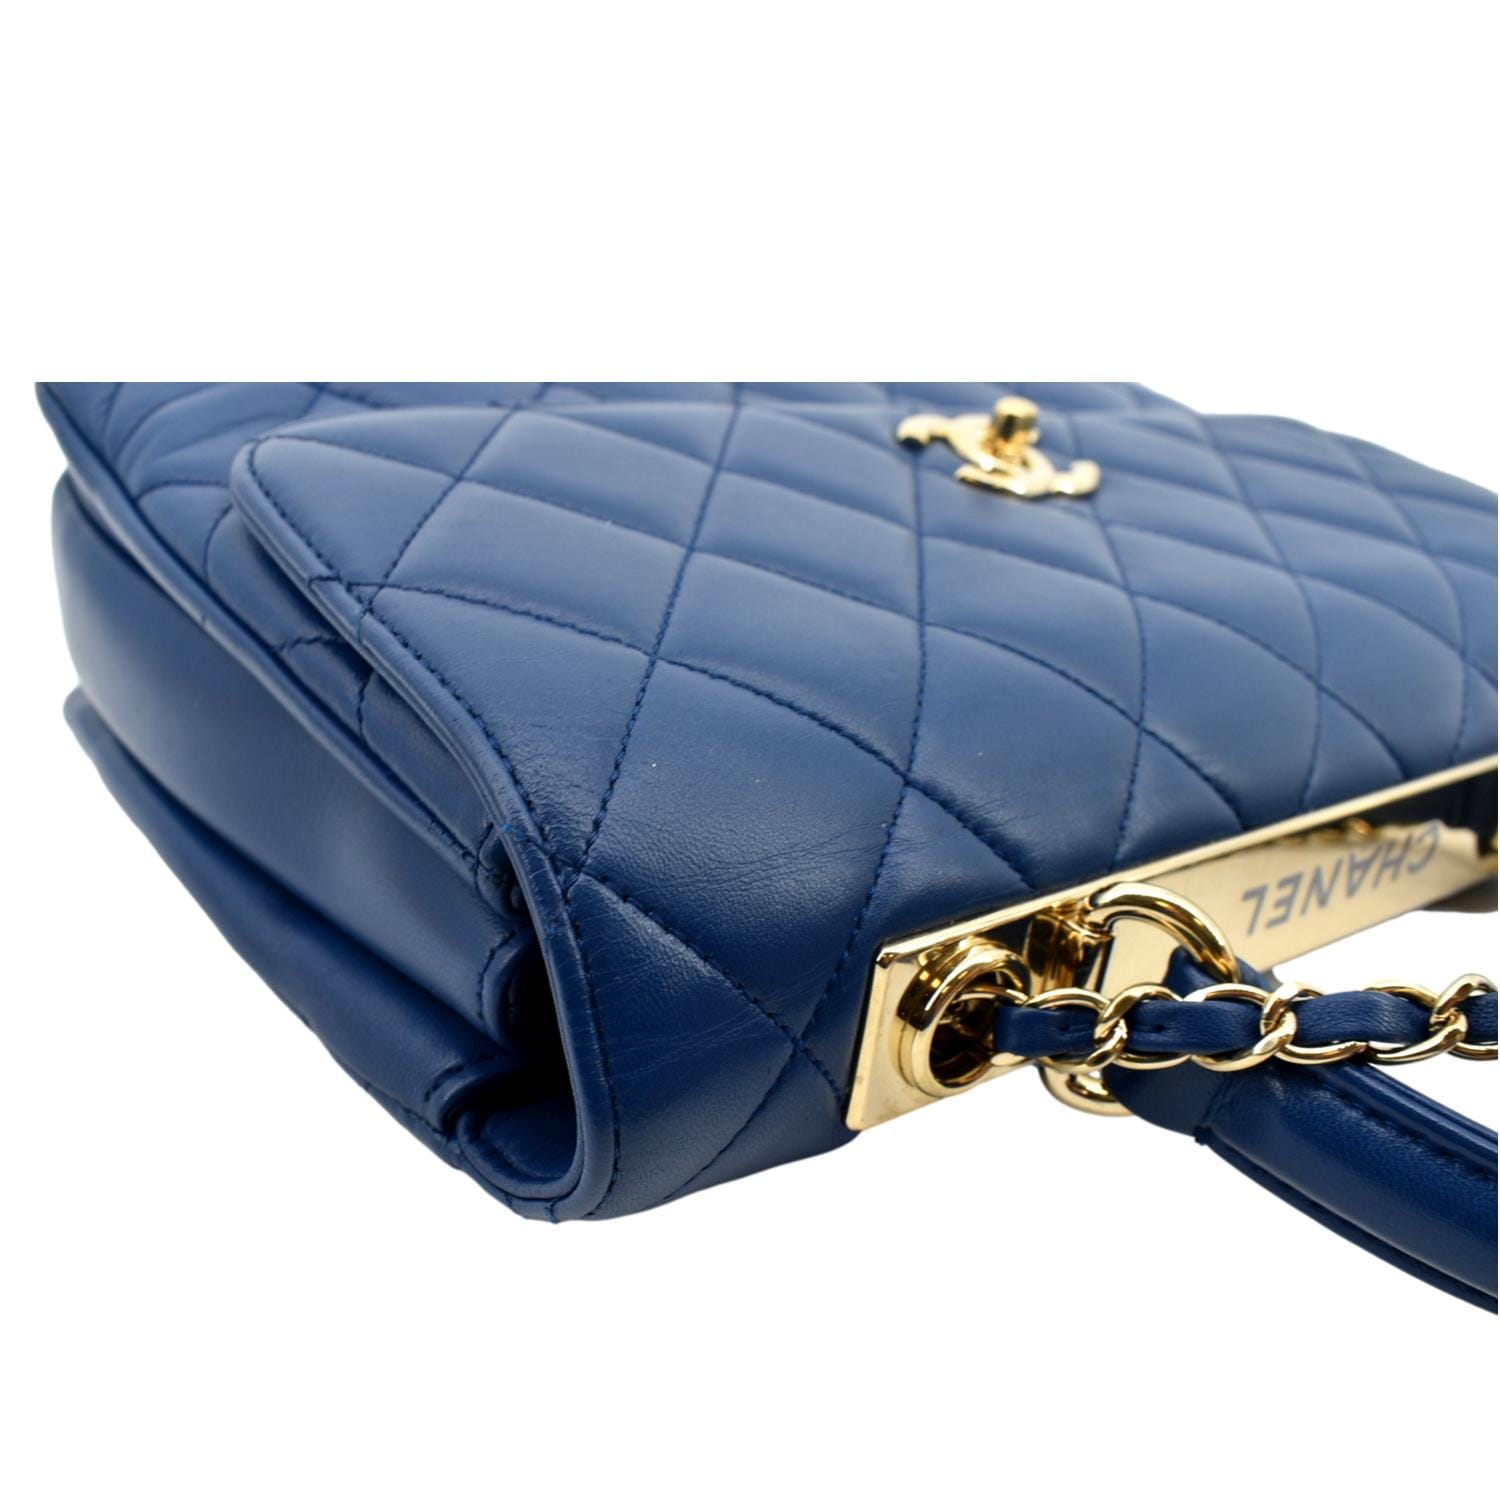 Chanel trendy cc bag size medium